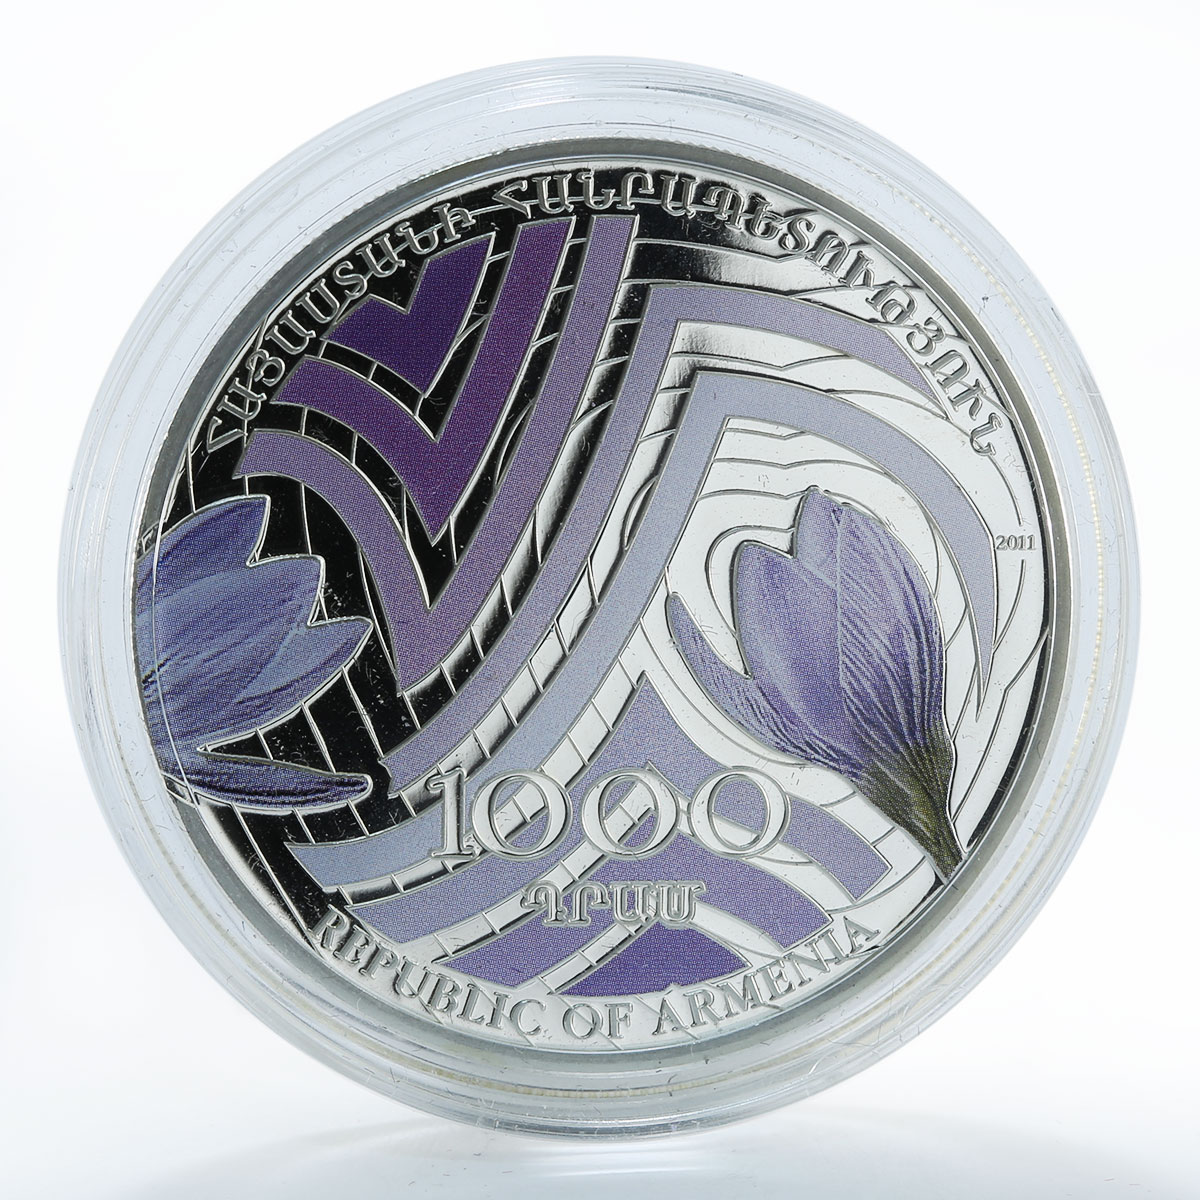 Armenia 1000 drams Crocus Saffron world of flowers proof silver coin 2011